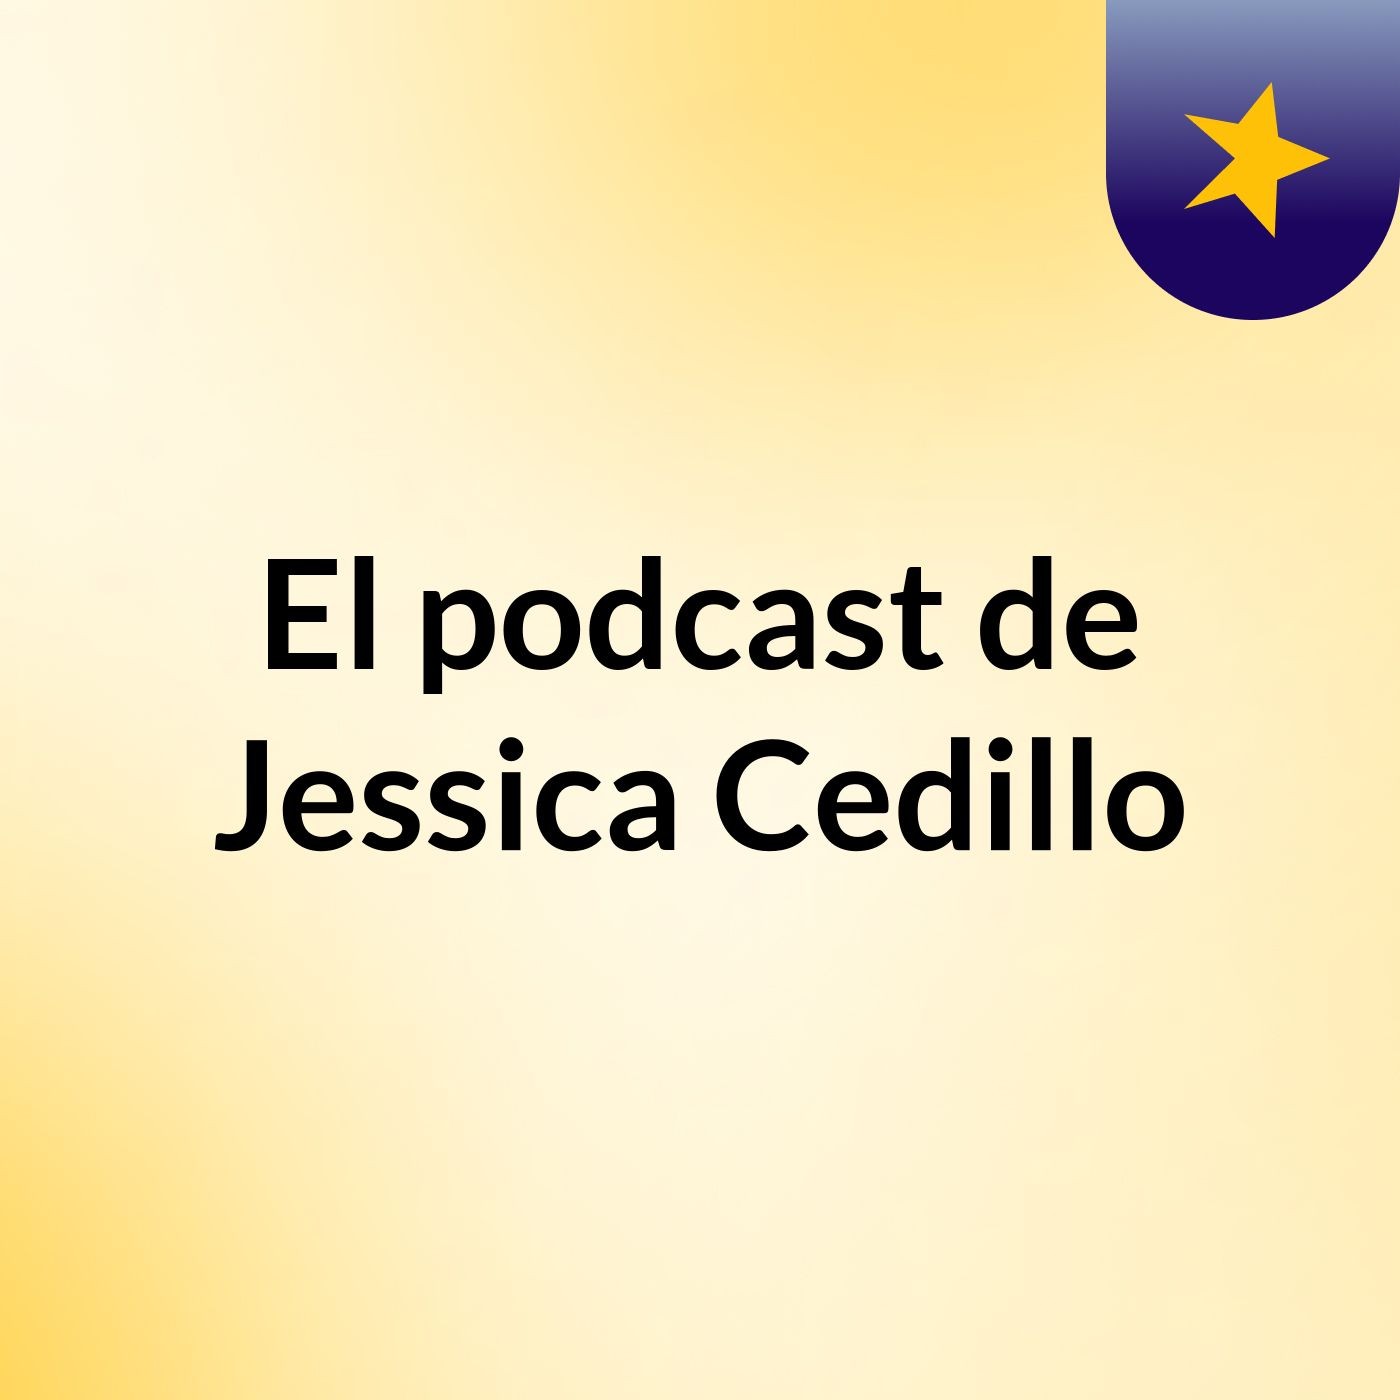 El podcast de Jessica Cedillo